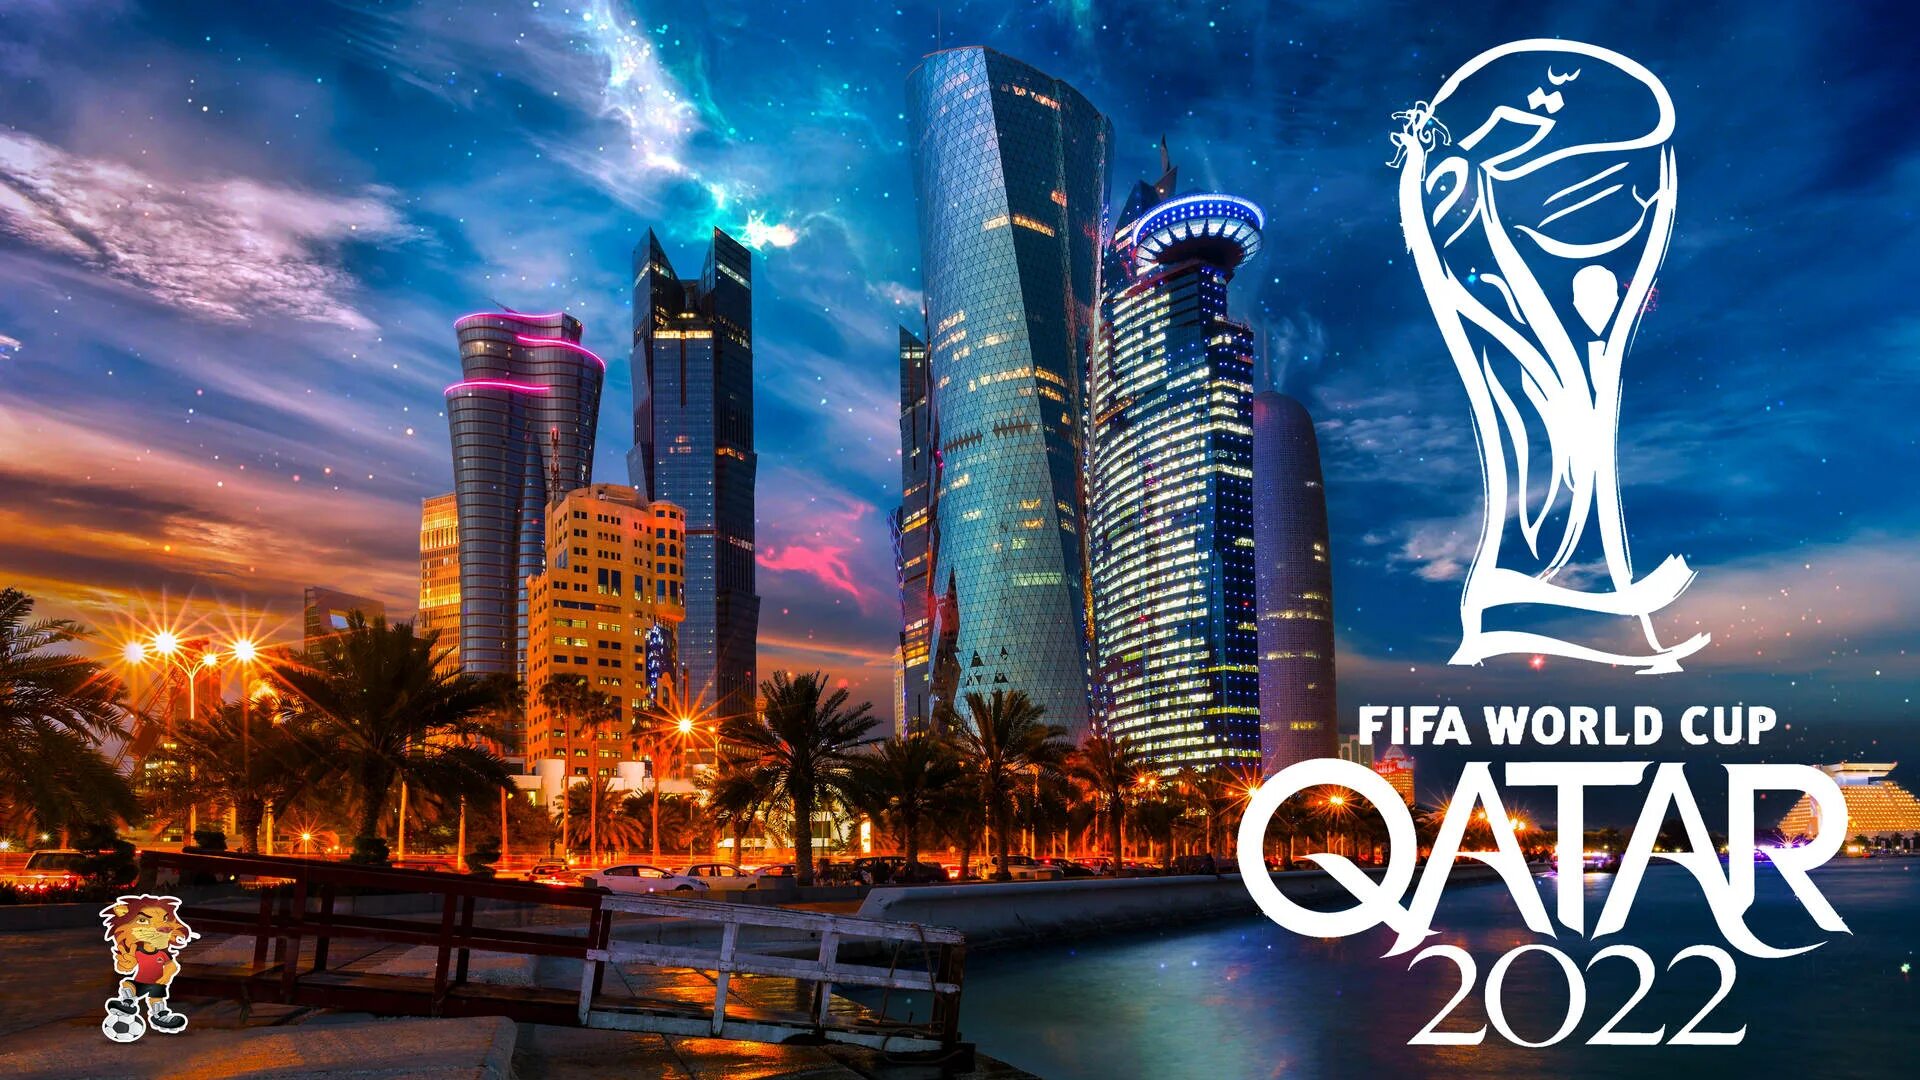 FIFA World Cup Qatar 2022. Qatar 2022 World Cup. FIFA 2022 Катар. Fifa qatar